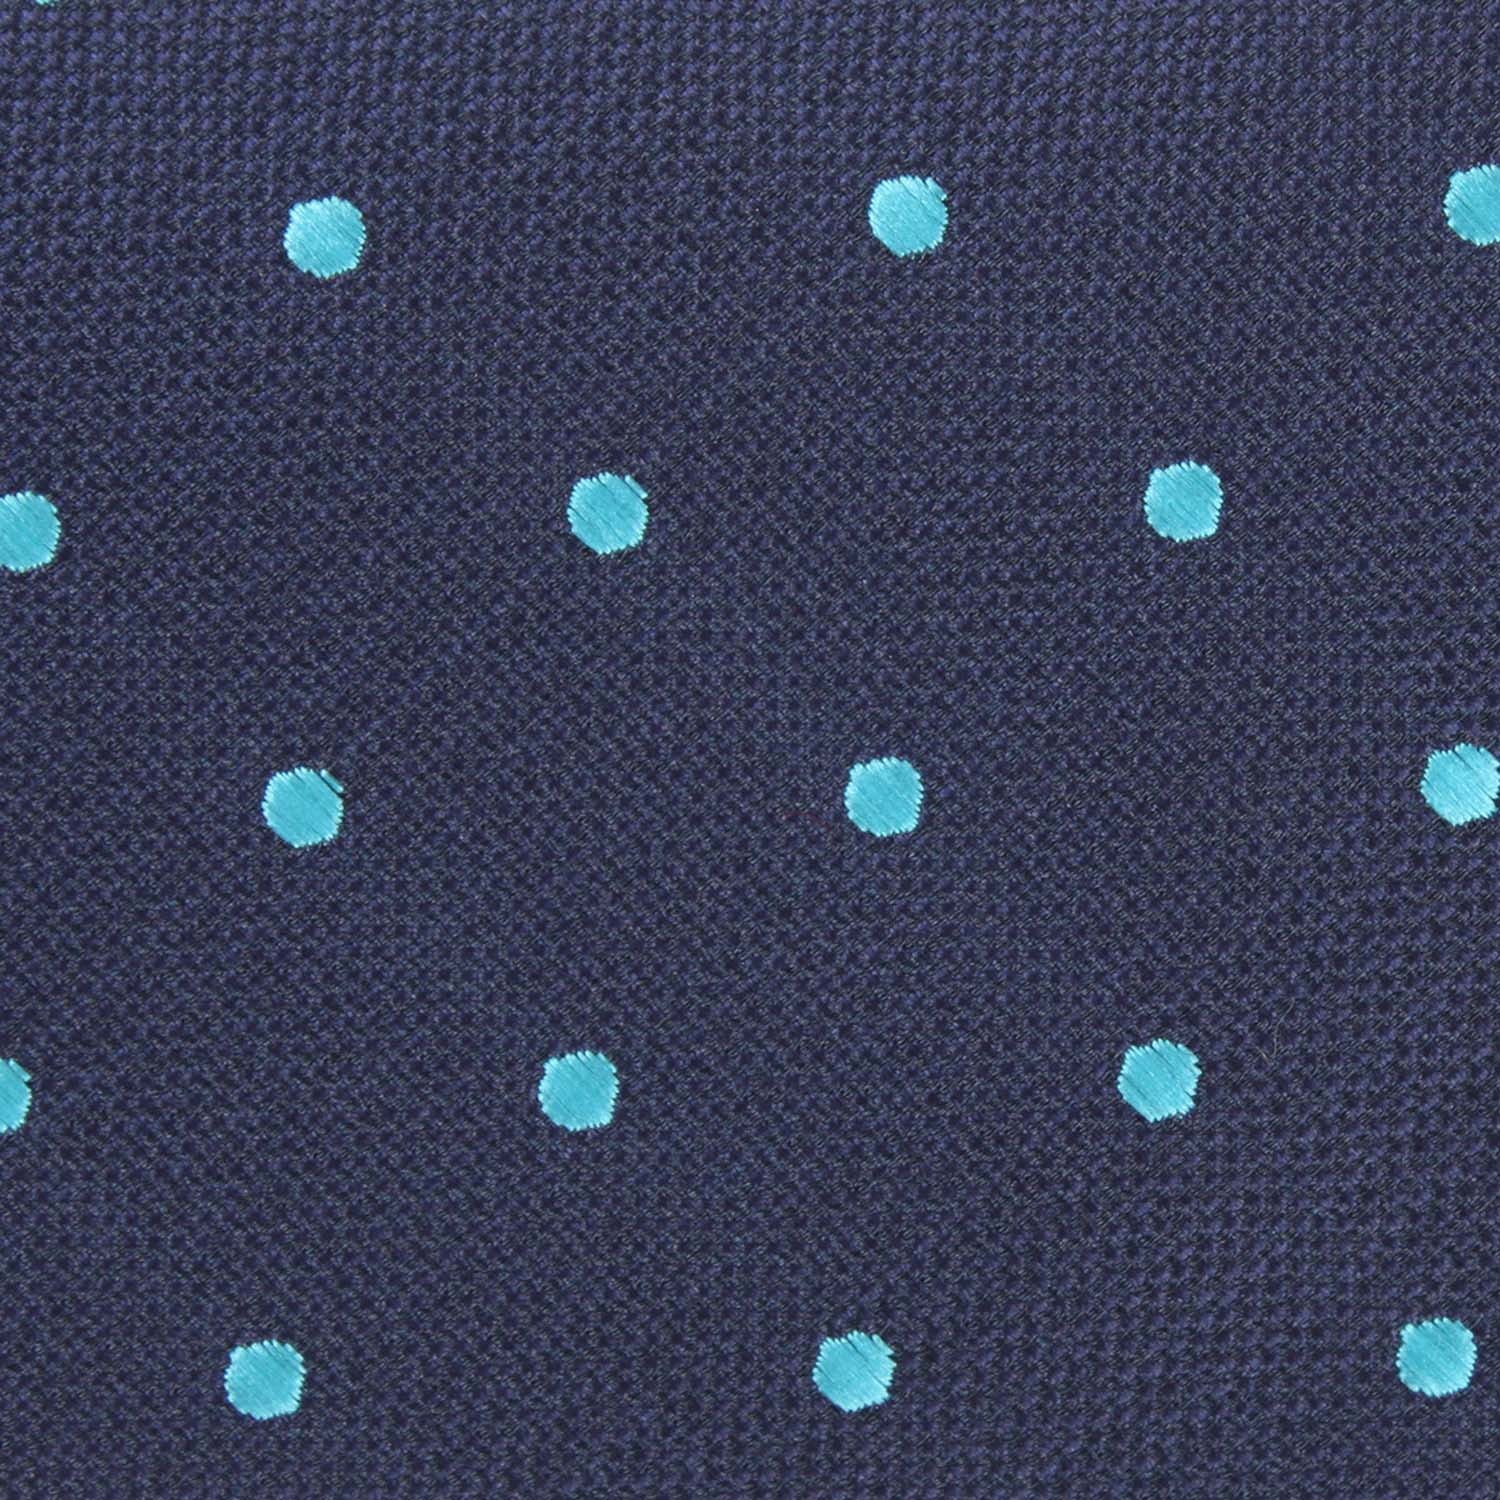 Navy Blue with Mint Blue Polka Dots Fabric Self Tie Diamond Tip Bow TieM127